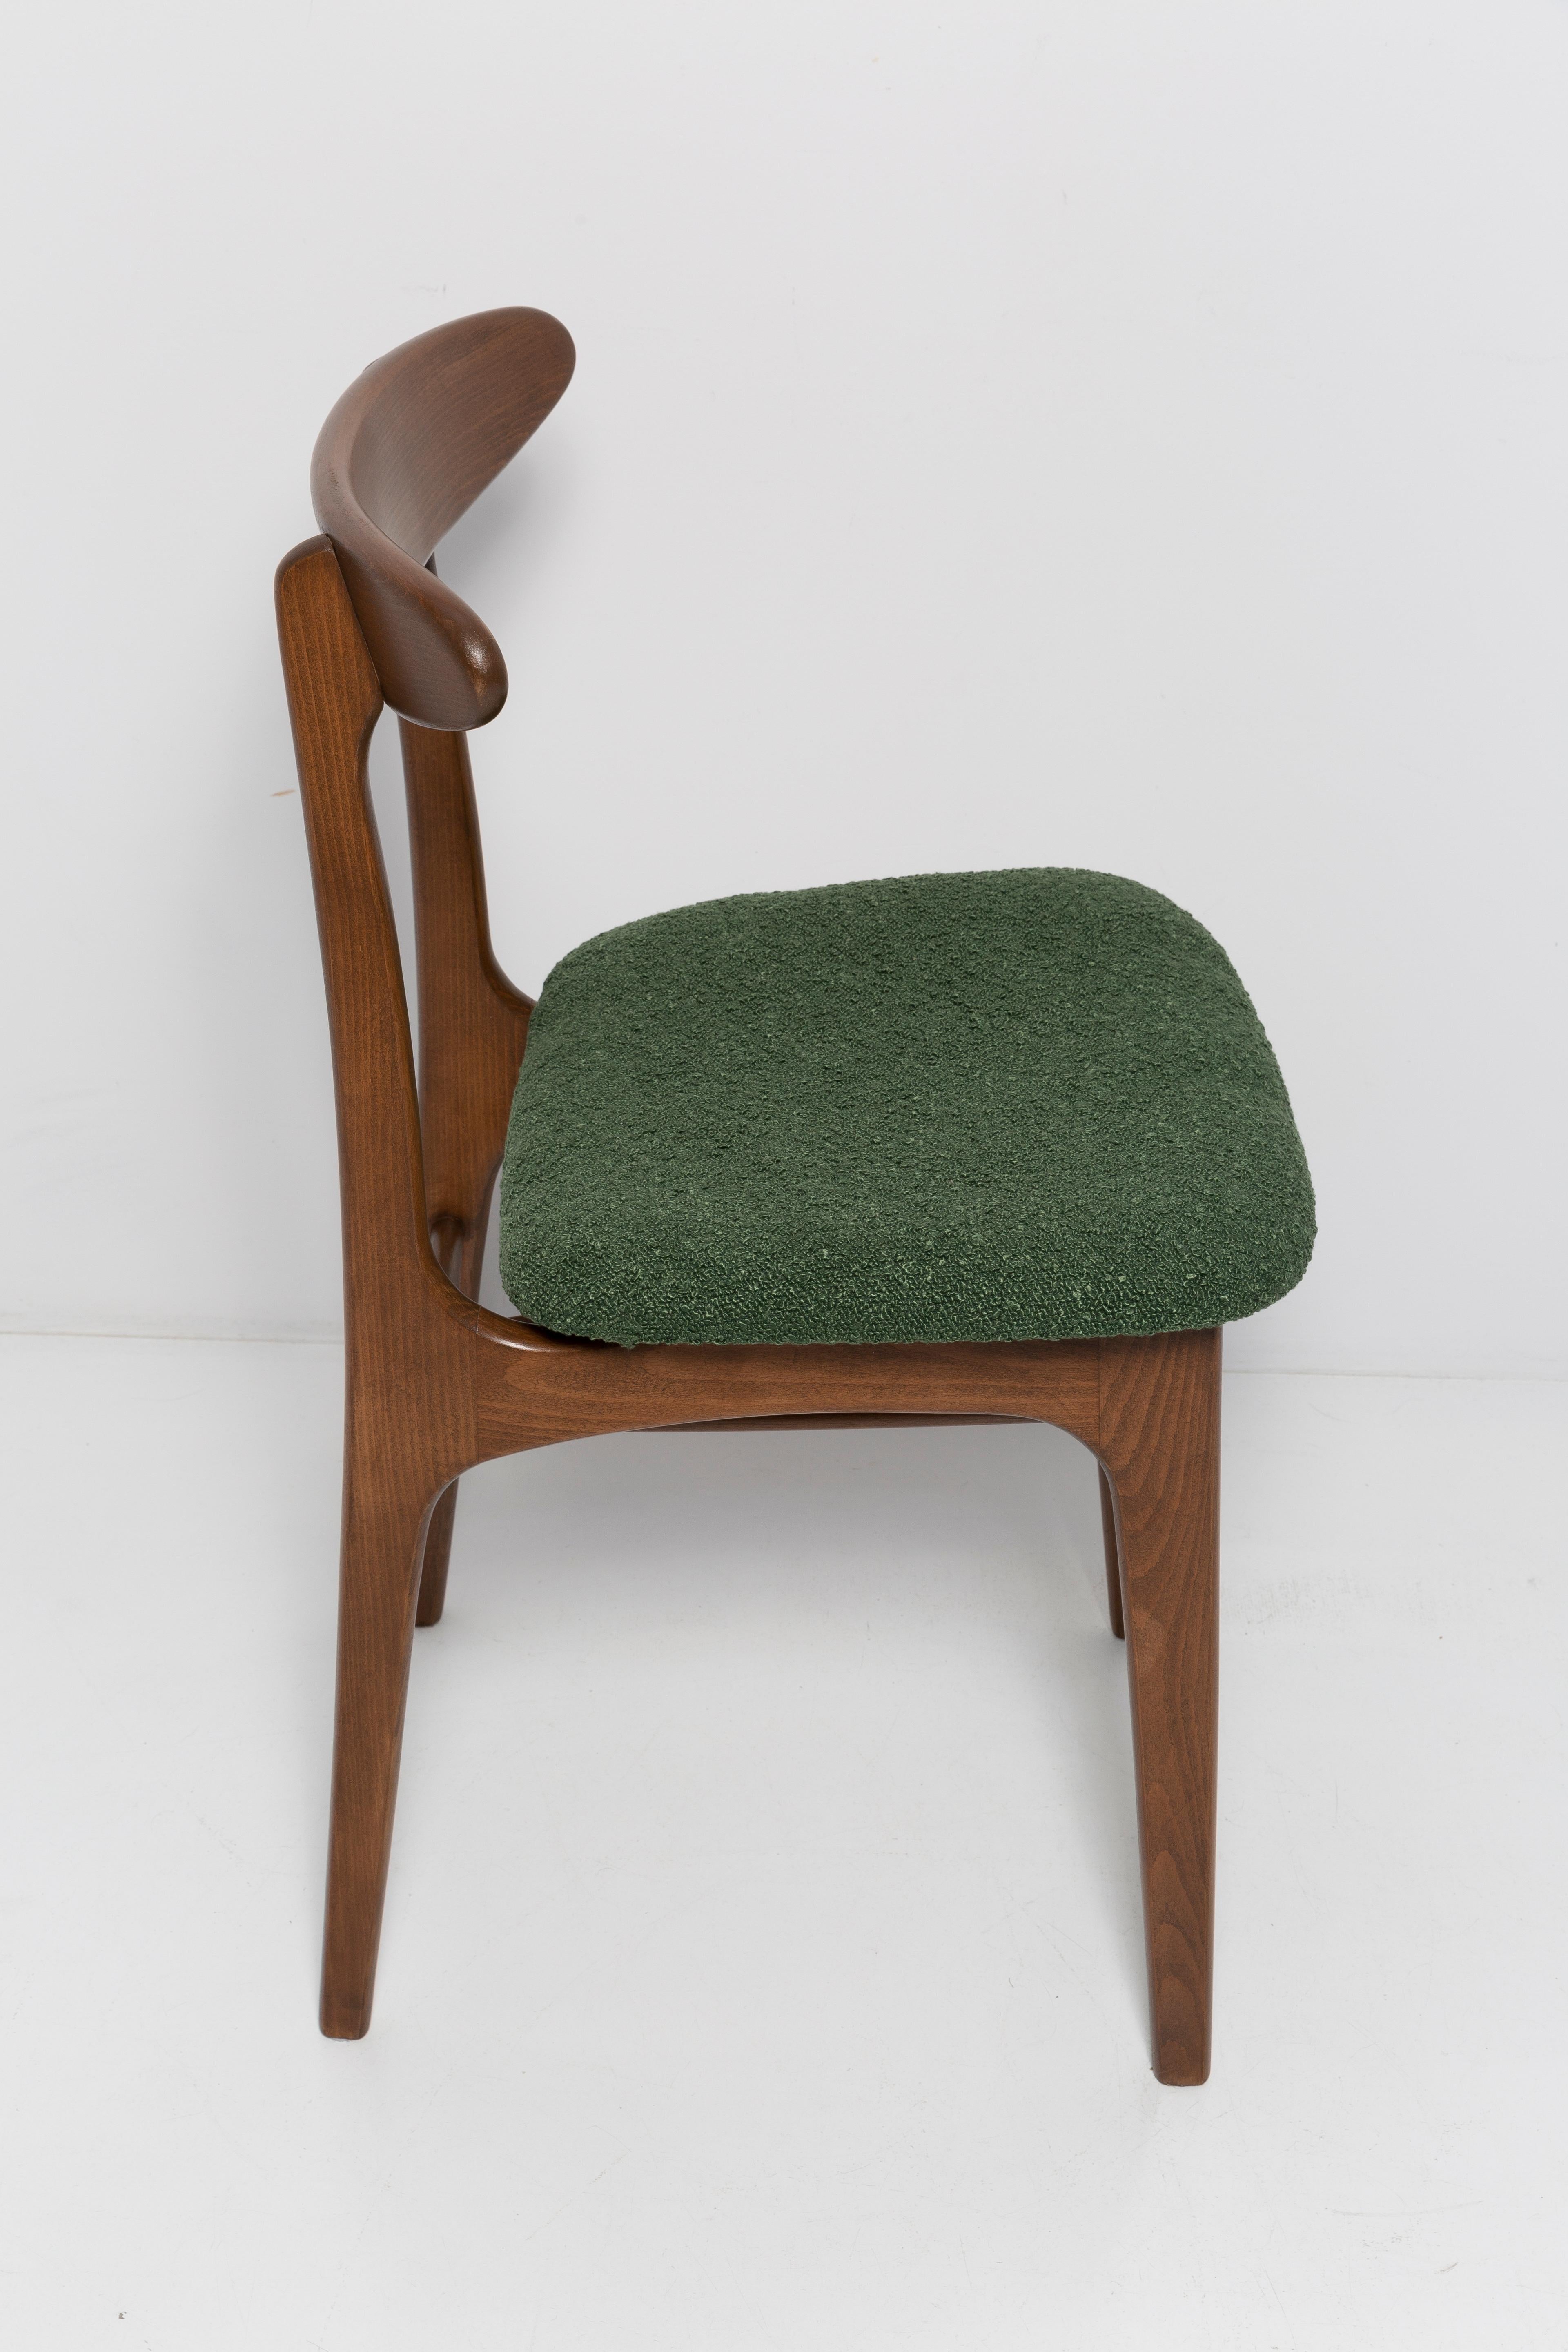 20th Century Mid Century Green Boucle Chair, Walnut Wood, Rajmund Halas, Poland, 1960s For Sale